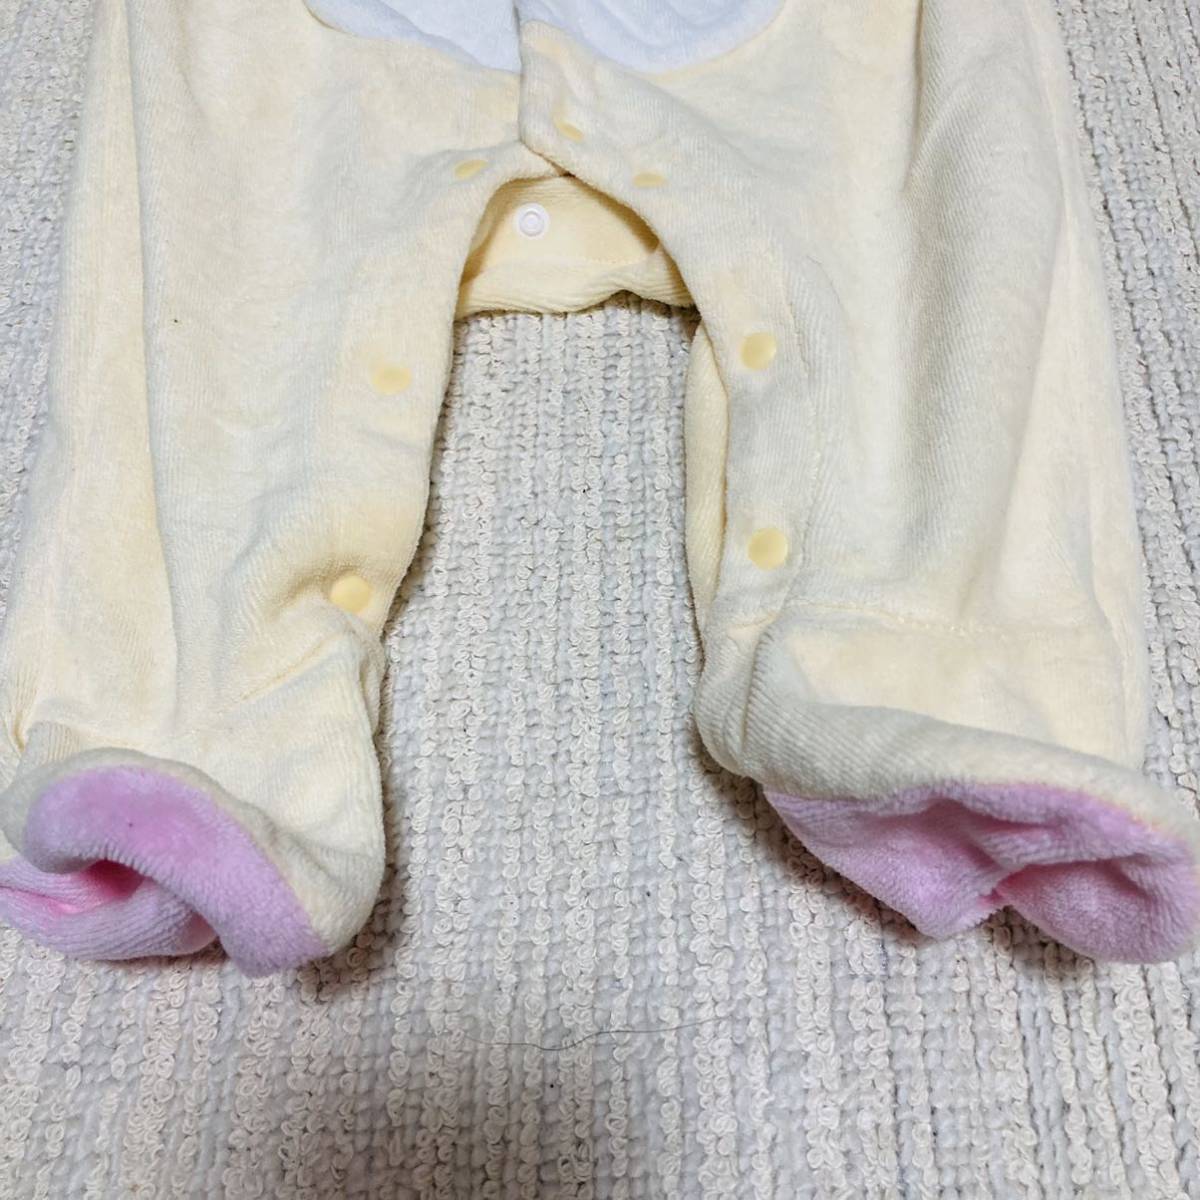  Rilakkuma Rilakuma детский комбинезон baby 50~60 детская одежда 